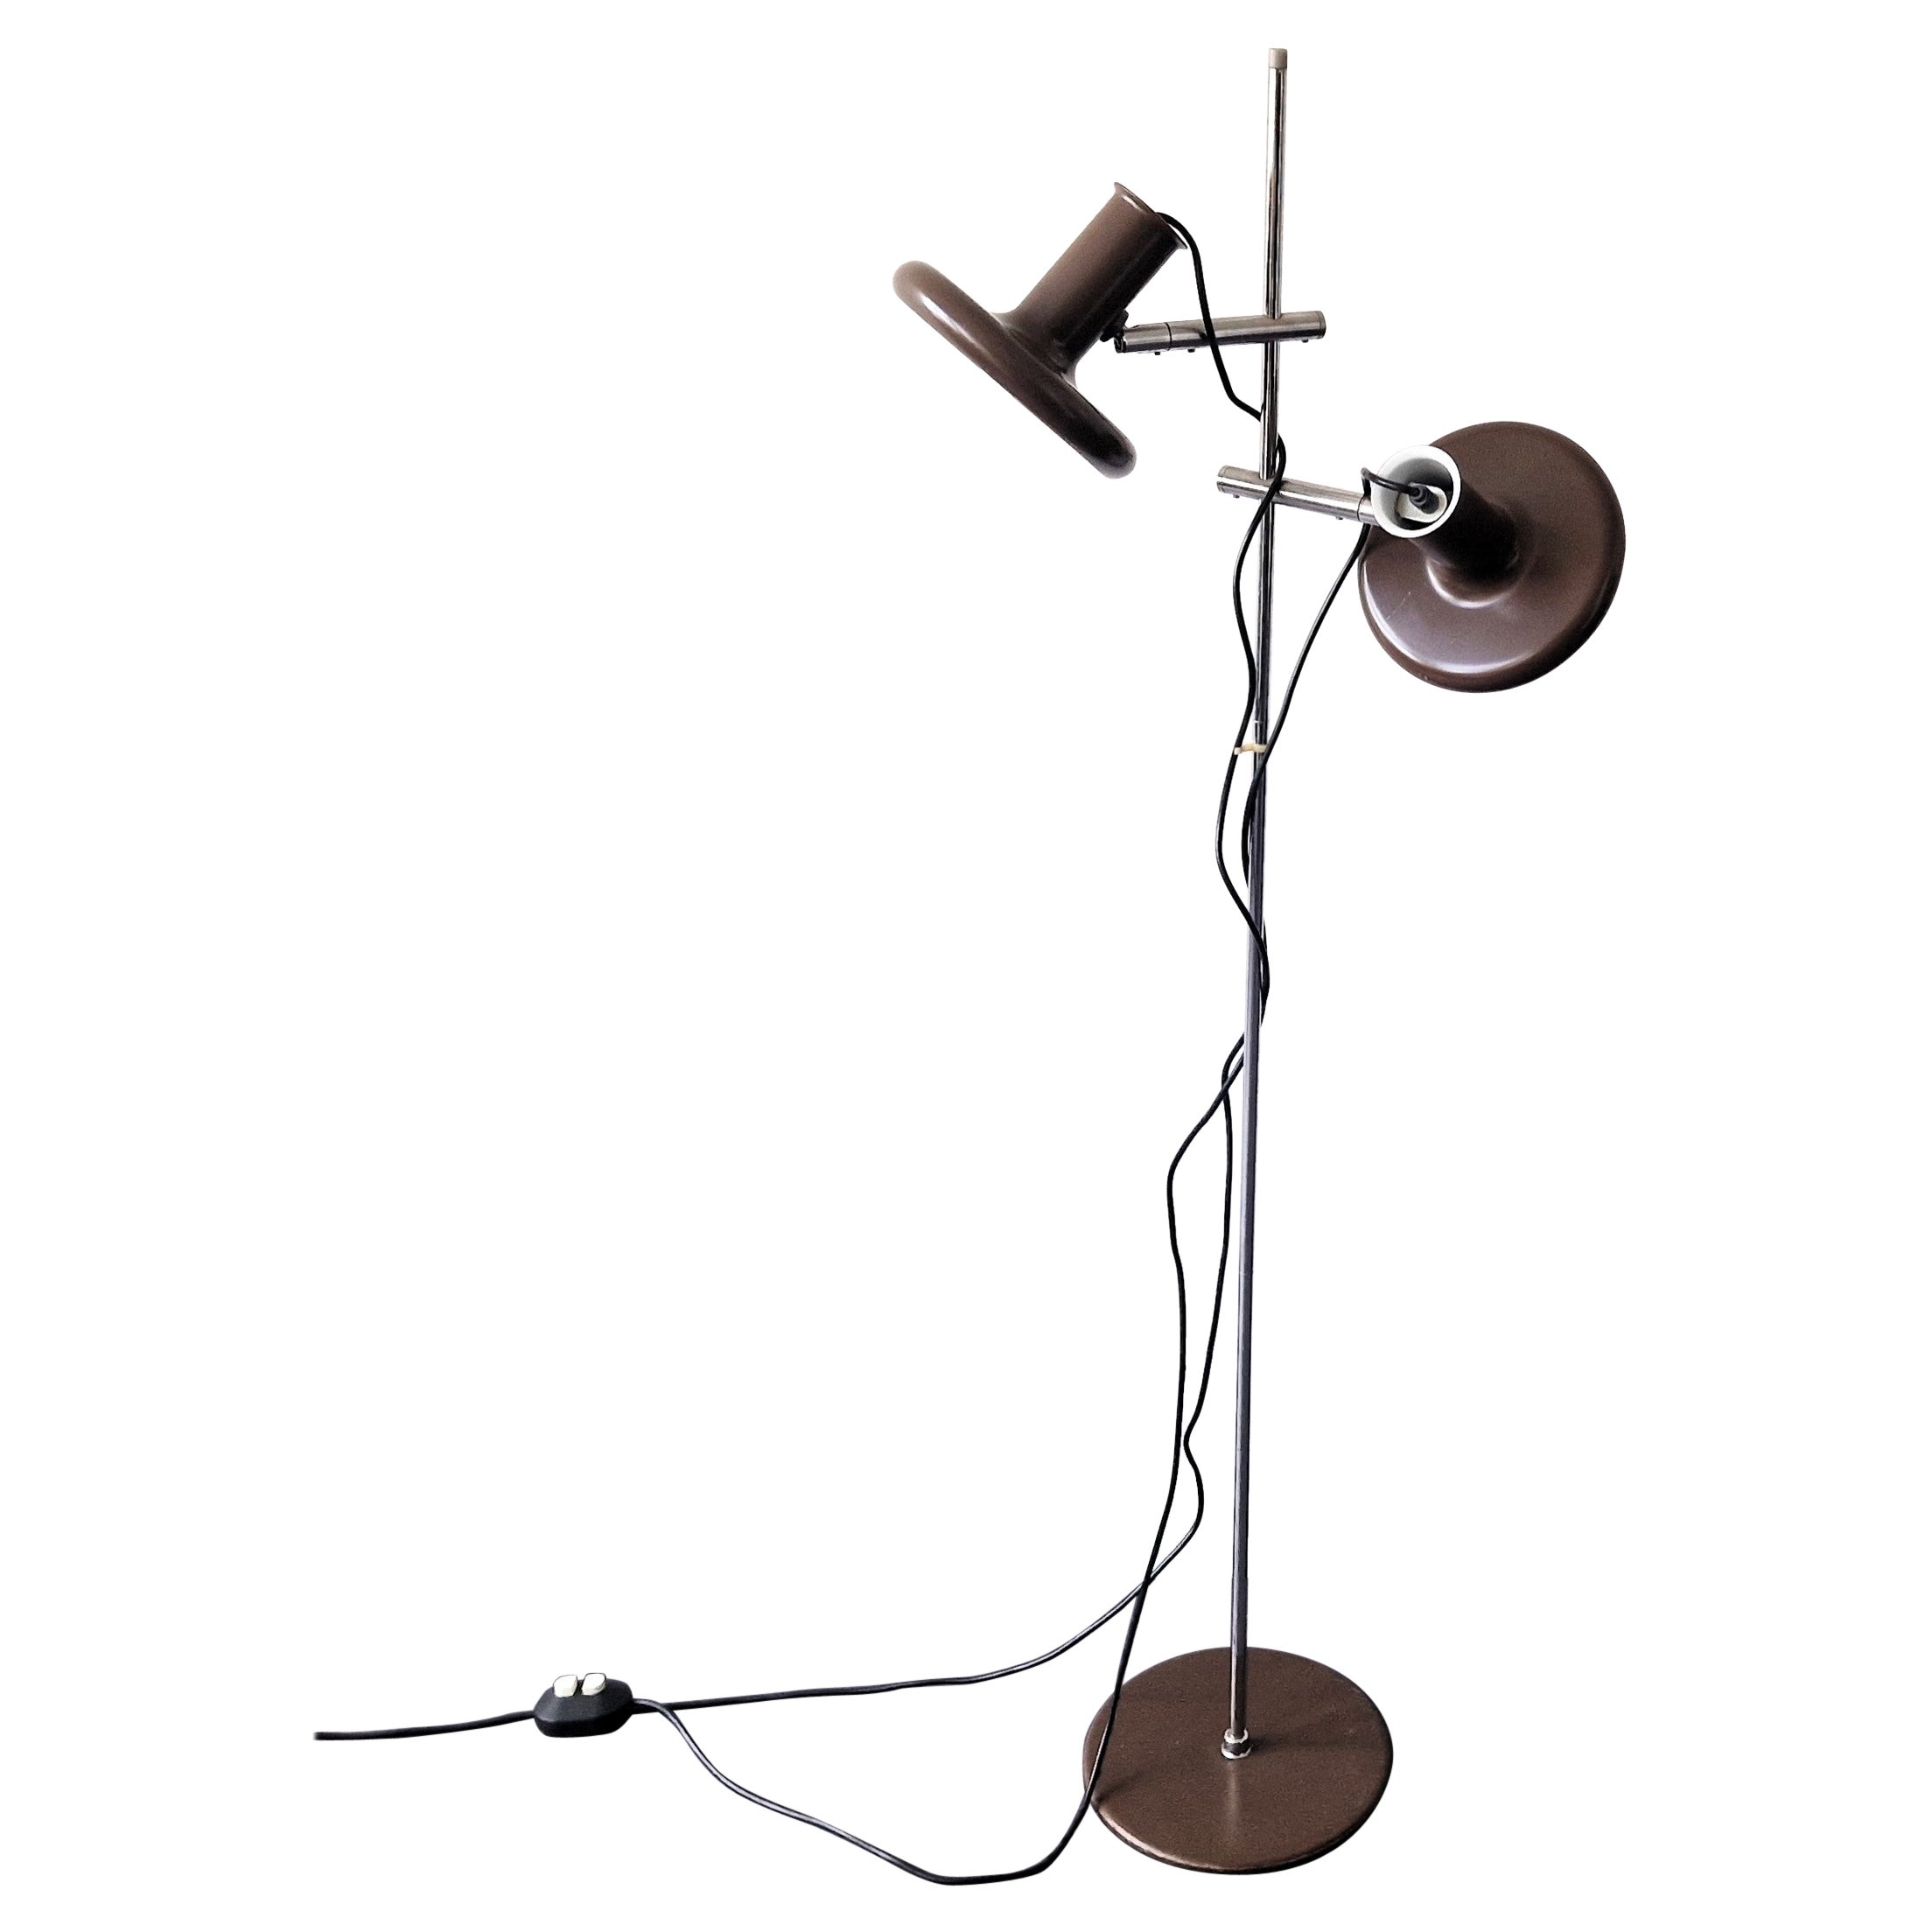 Dark brown 'Optima 4' floor lamp by Hans Due for Fog and Mørup, Denmark 1970's For Sale